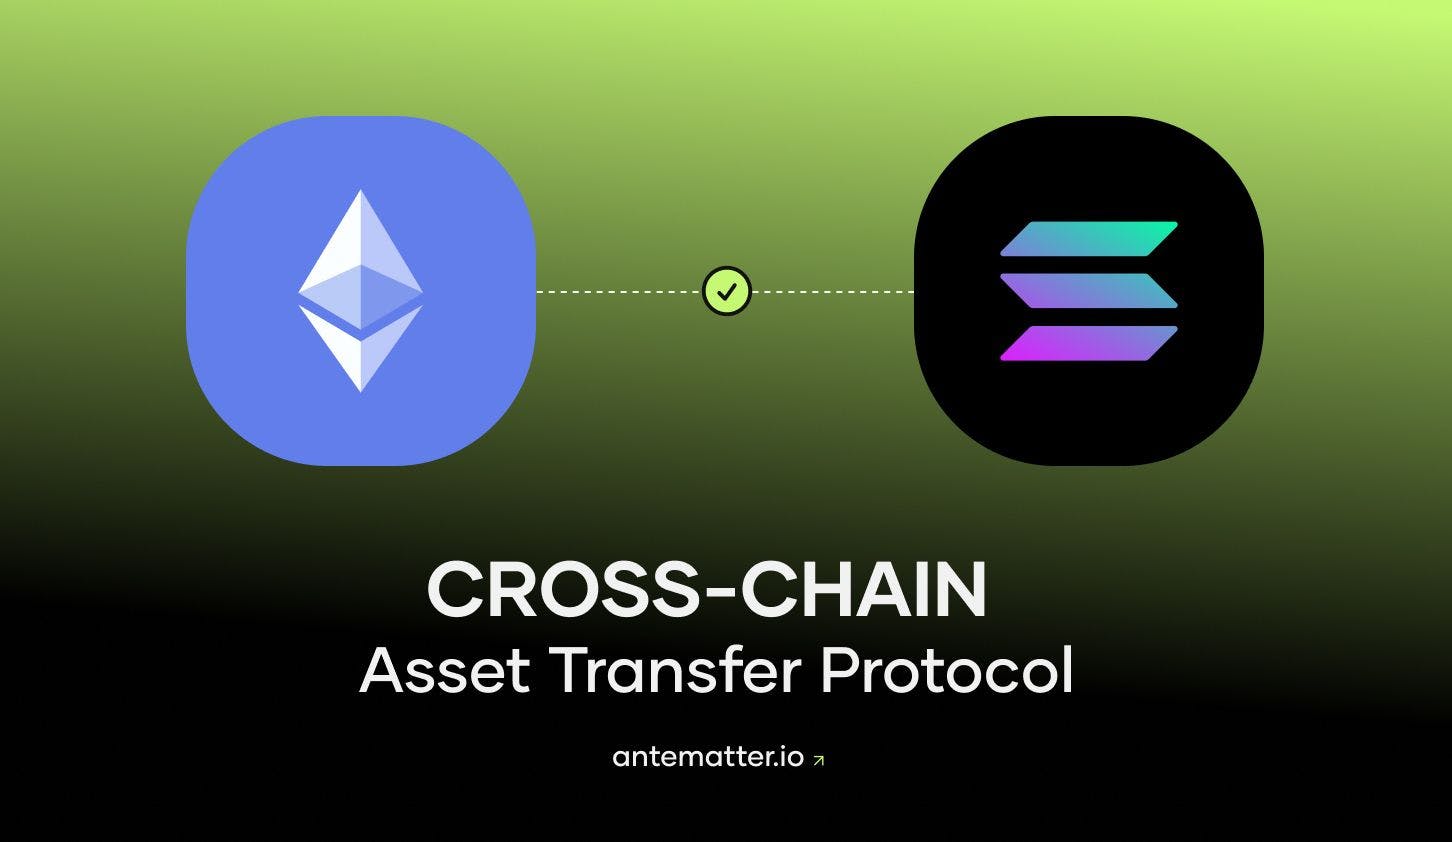 Cross-chain asset transfer protocol